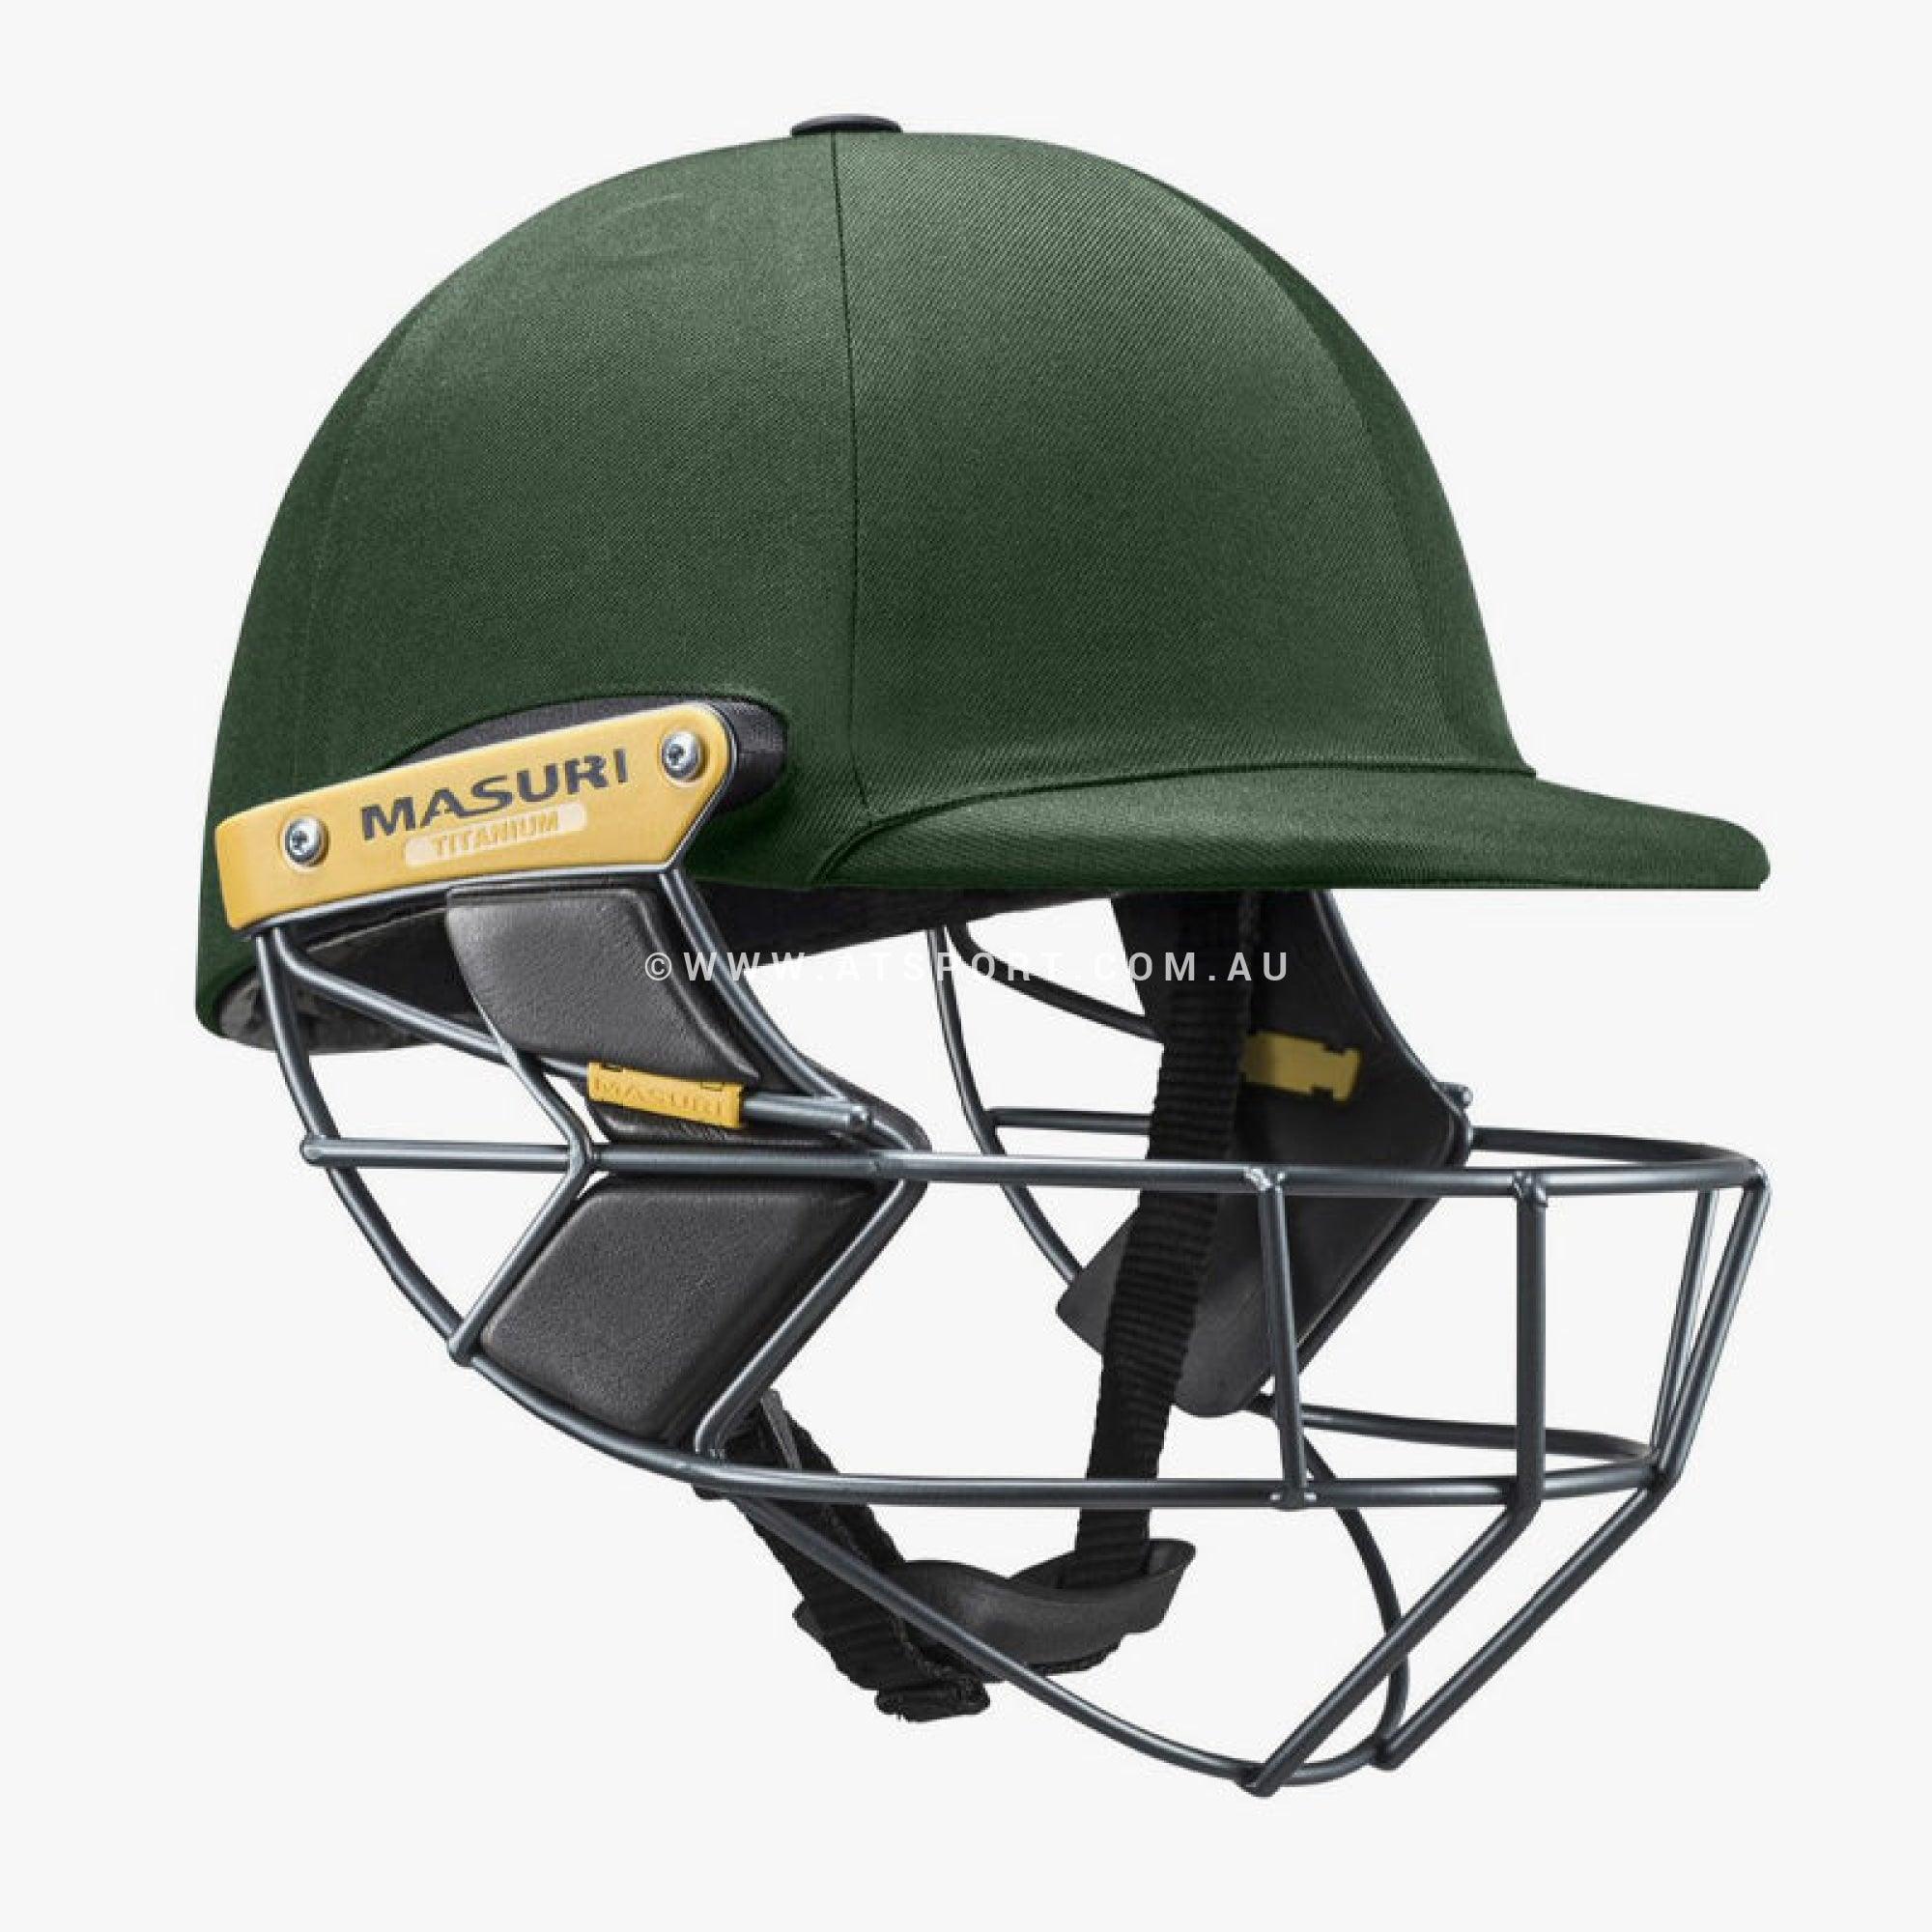 Masuri T LINE TITANIUM Grille WICKET KEEPING Cricket Helmet - AT Sports